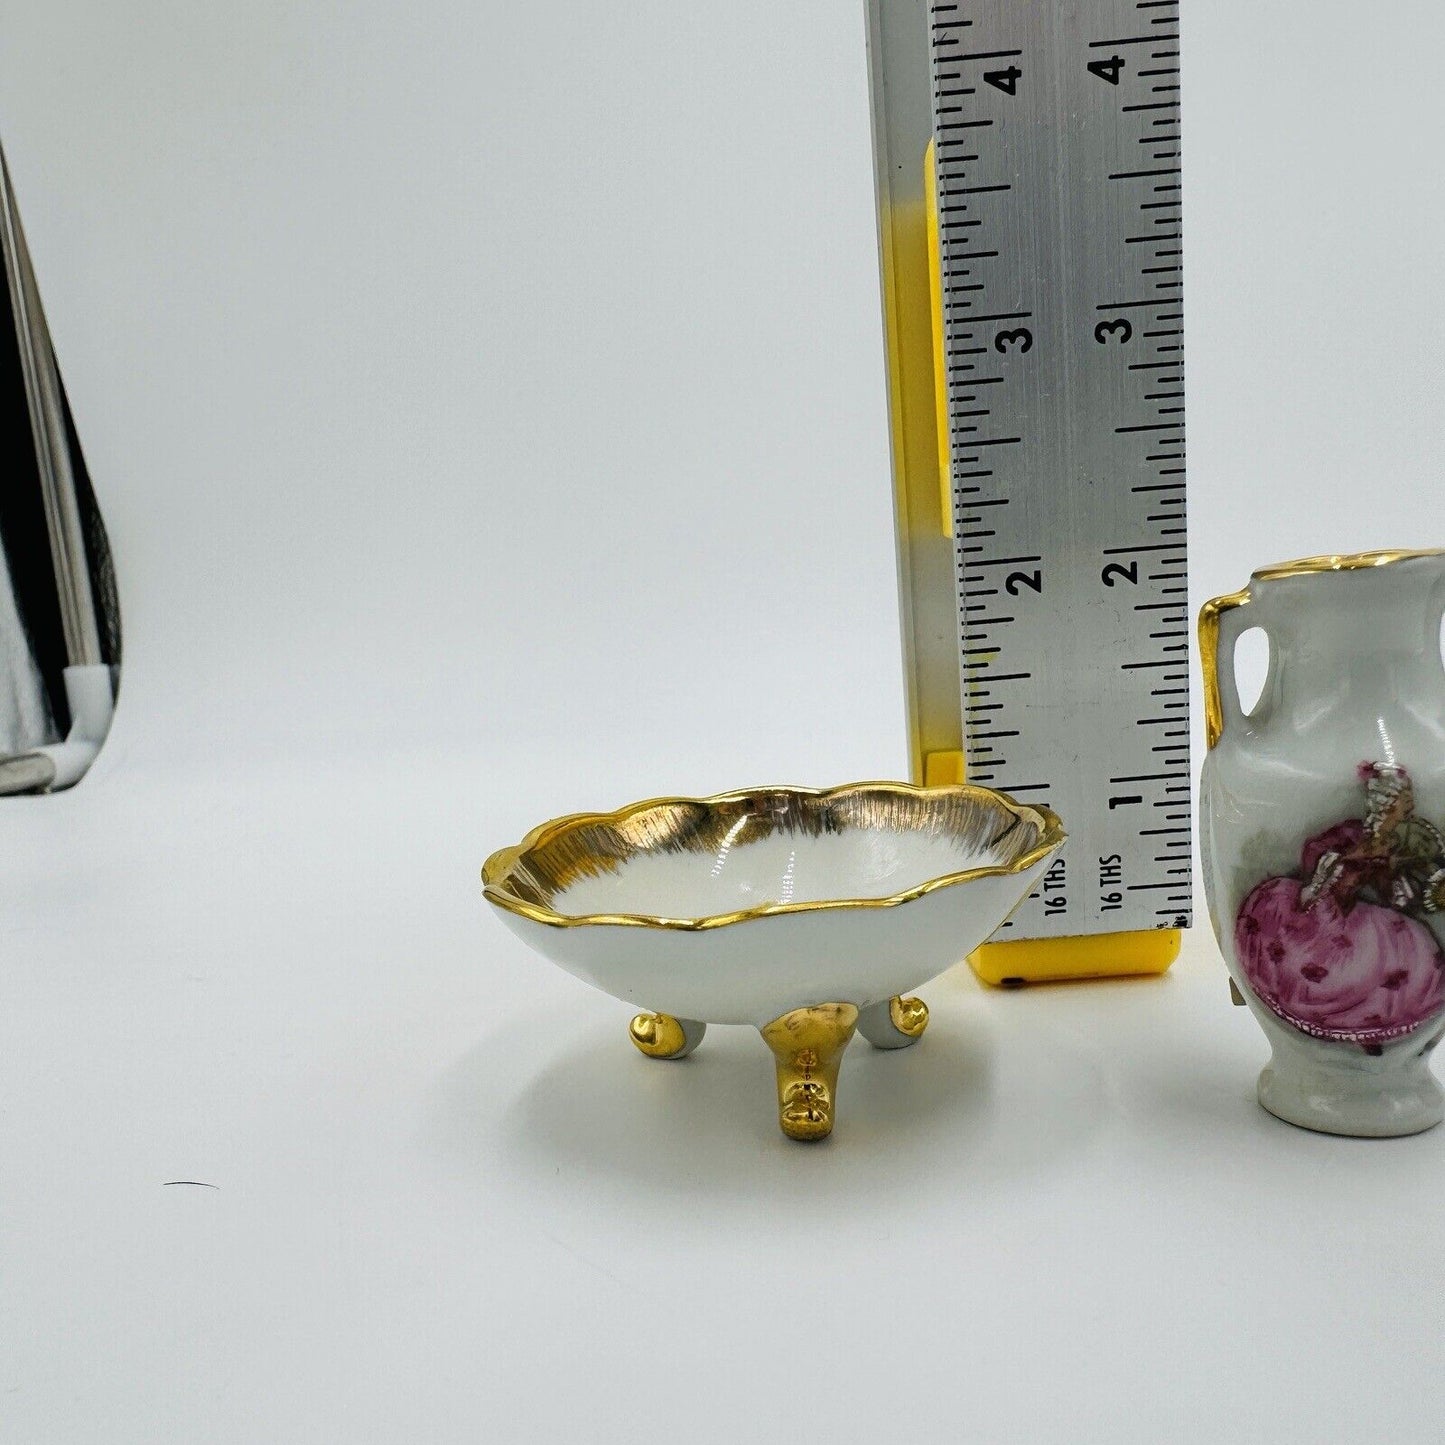 Limoges France Porcelain Miniature Painted Set Mini Vase Urn Bowl